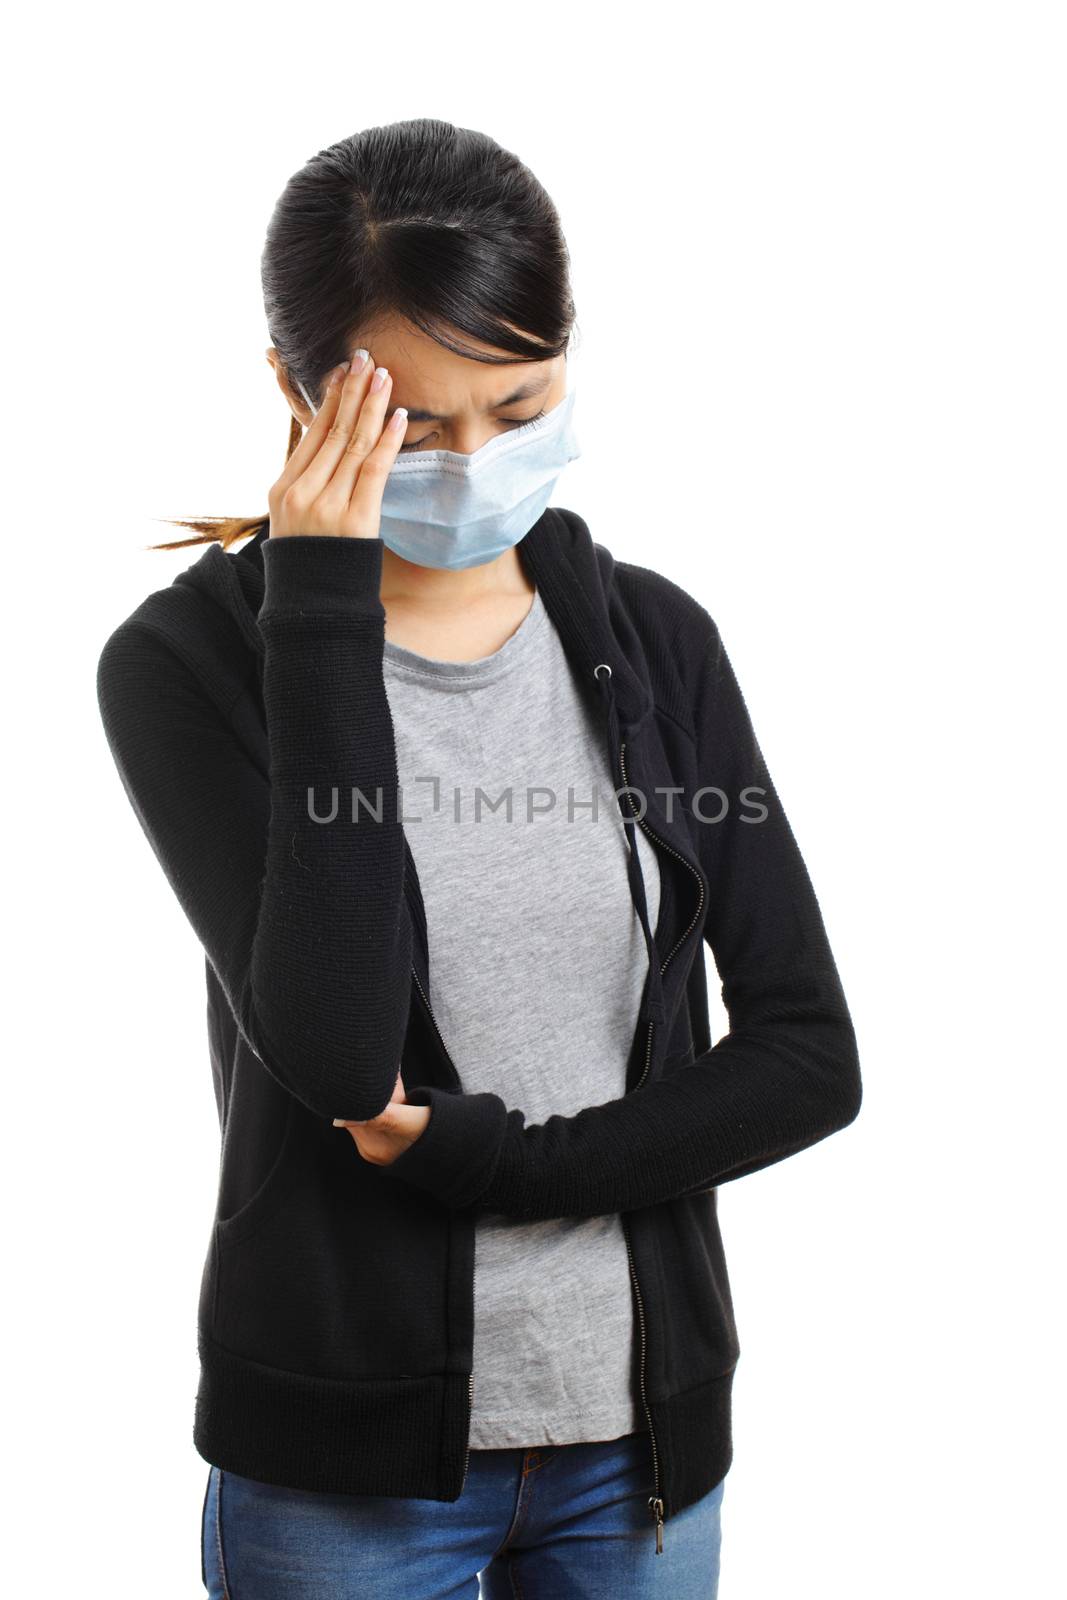 Sickness asian woman